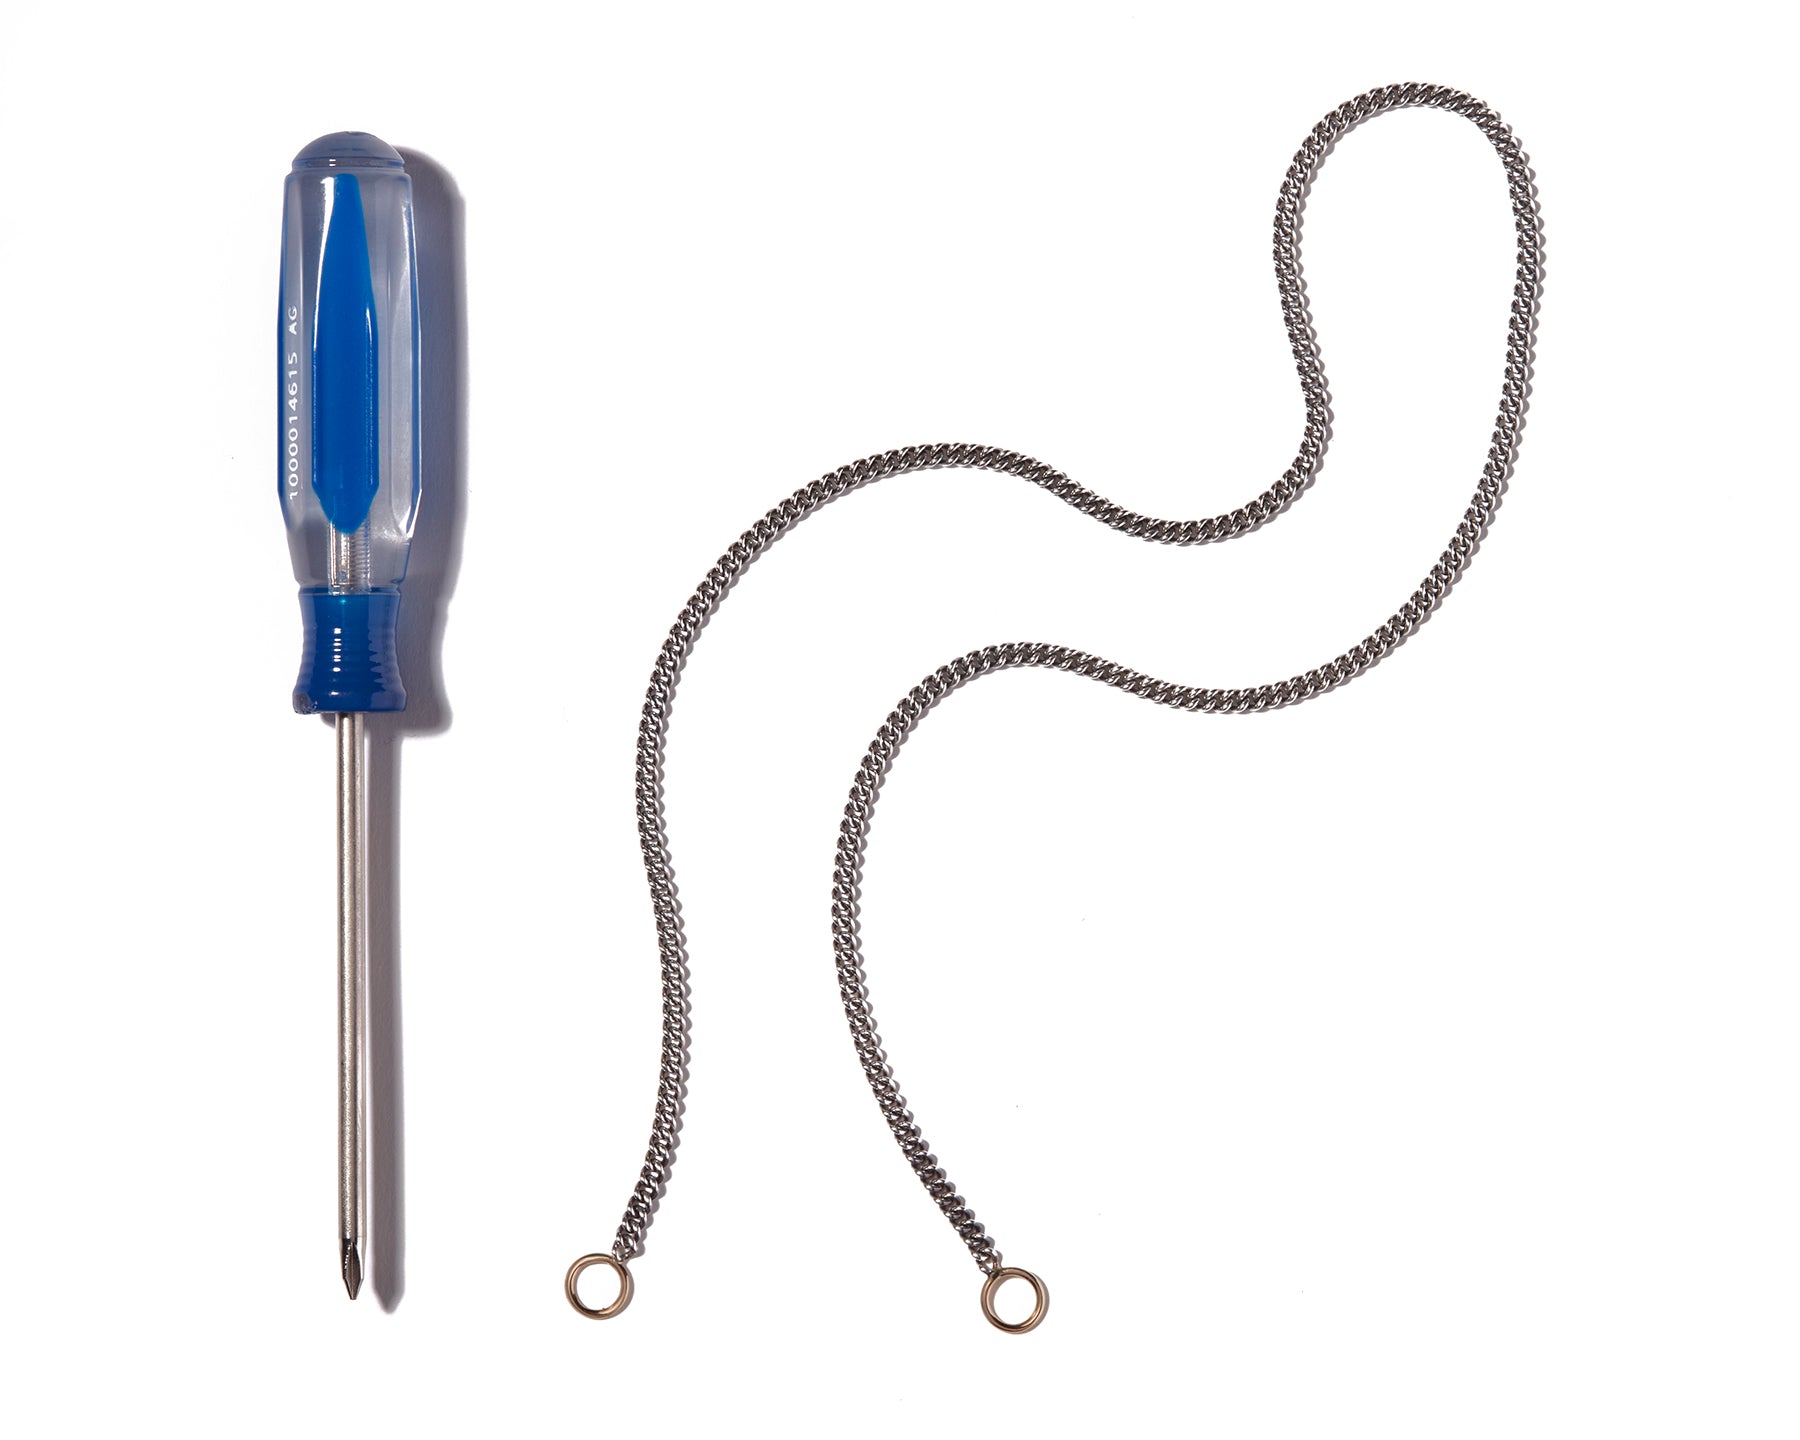 Curb chain necklace alongside blue screwdriver